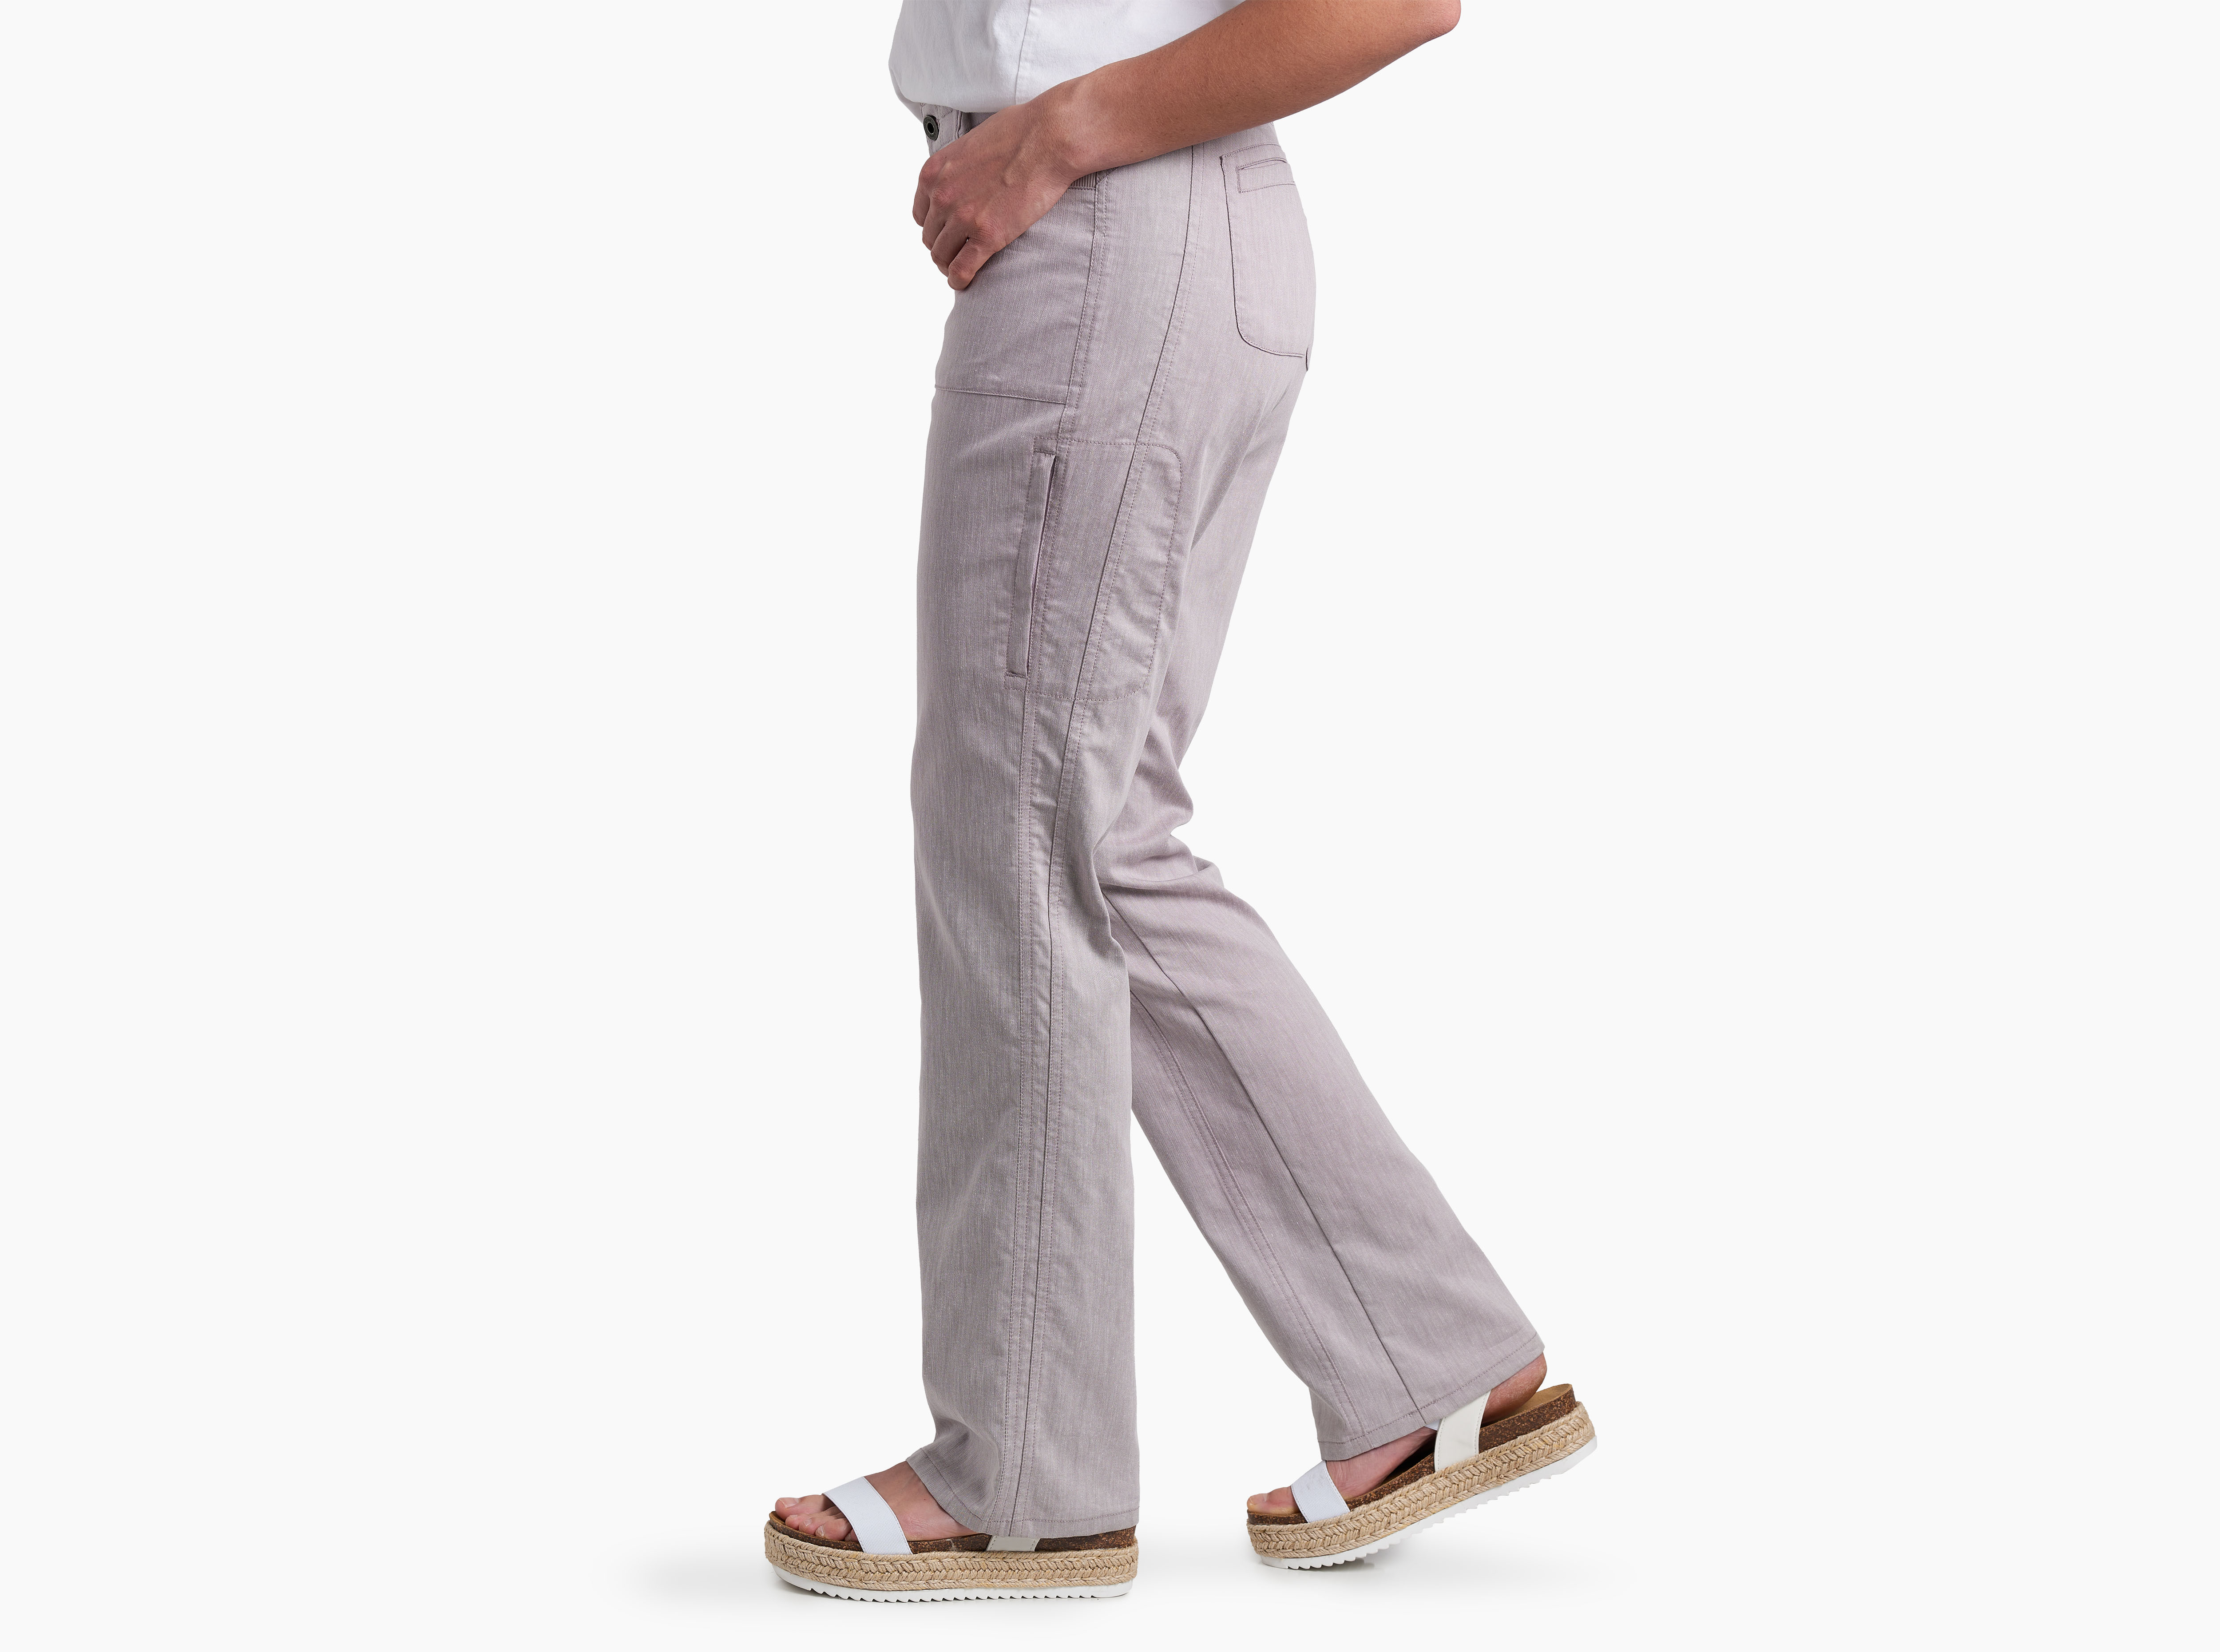 KuhlCabo Pants, 30 Inseam - Womens